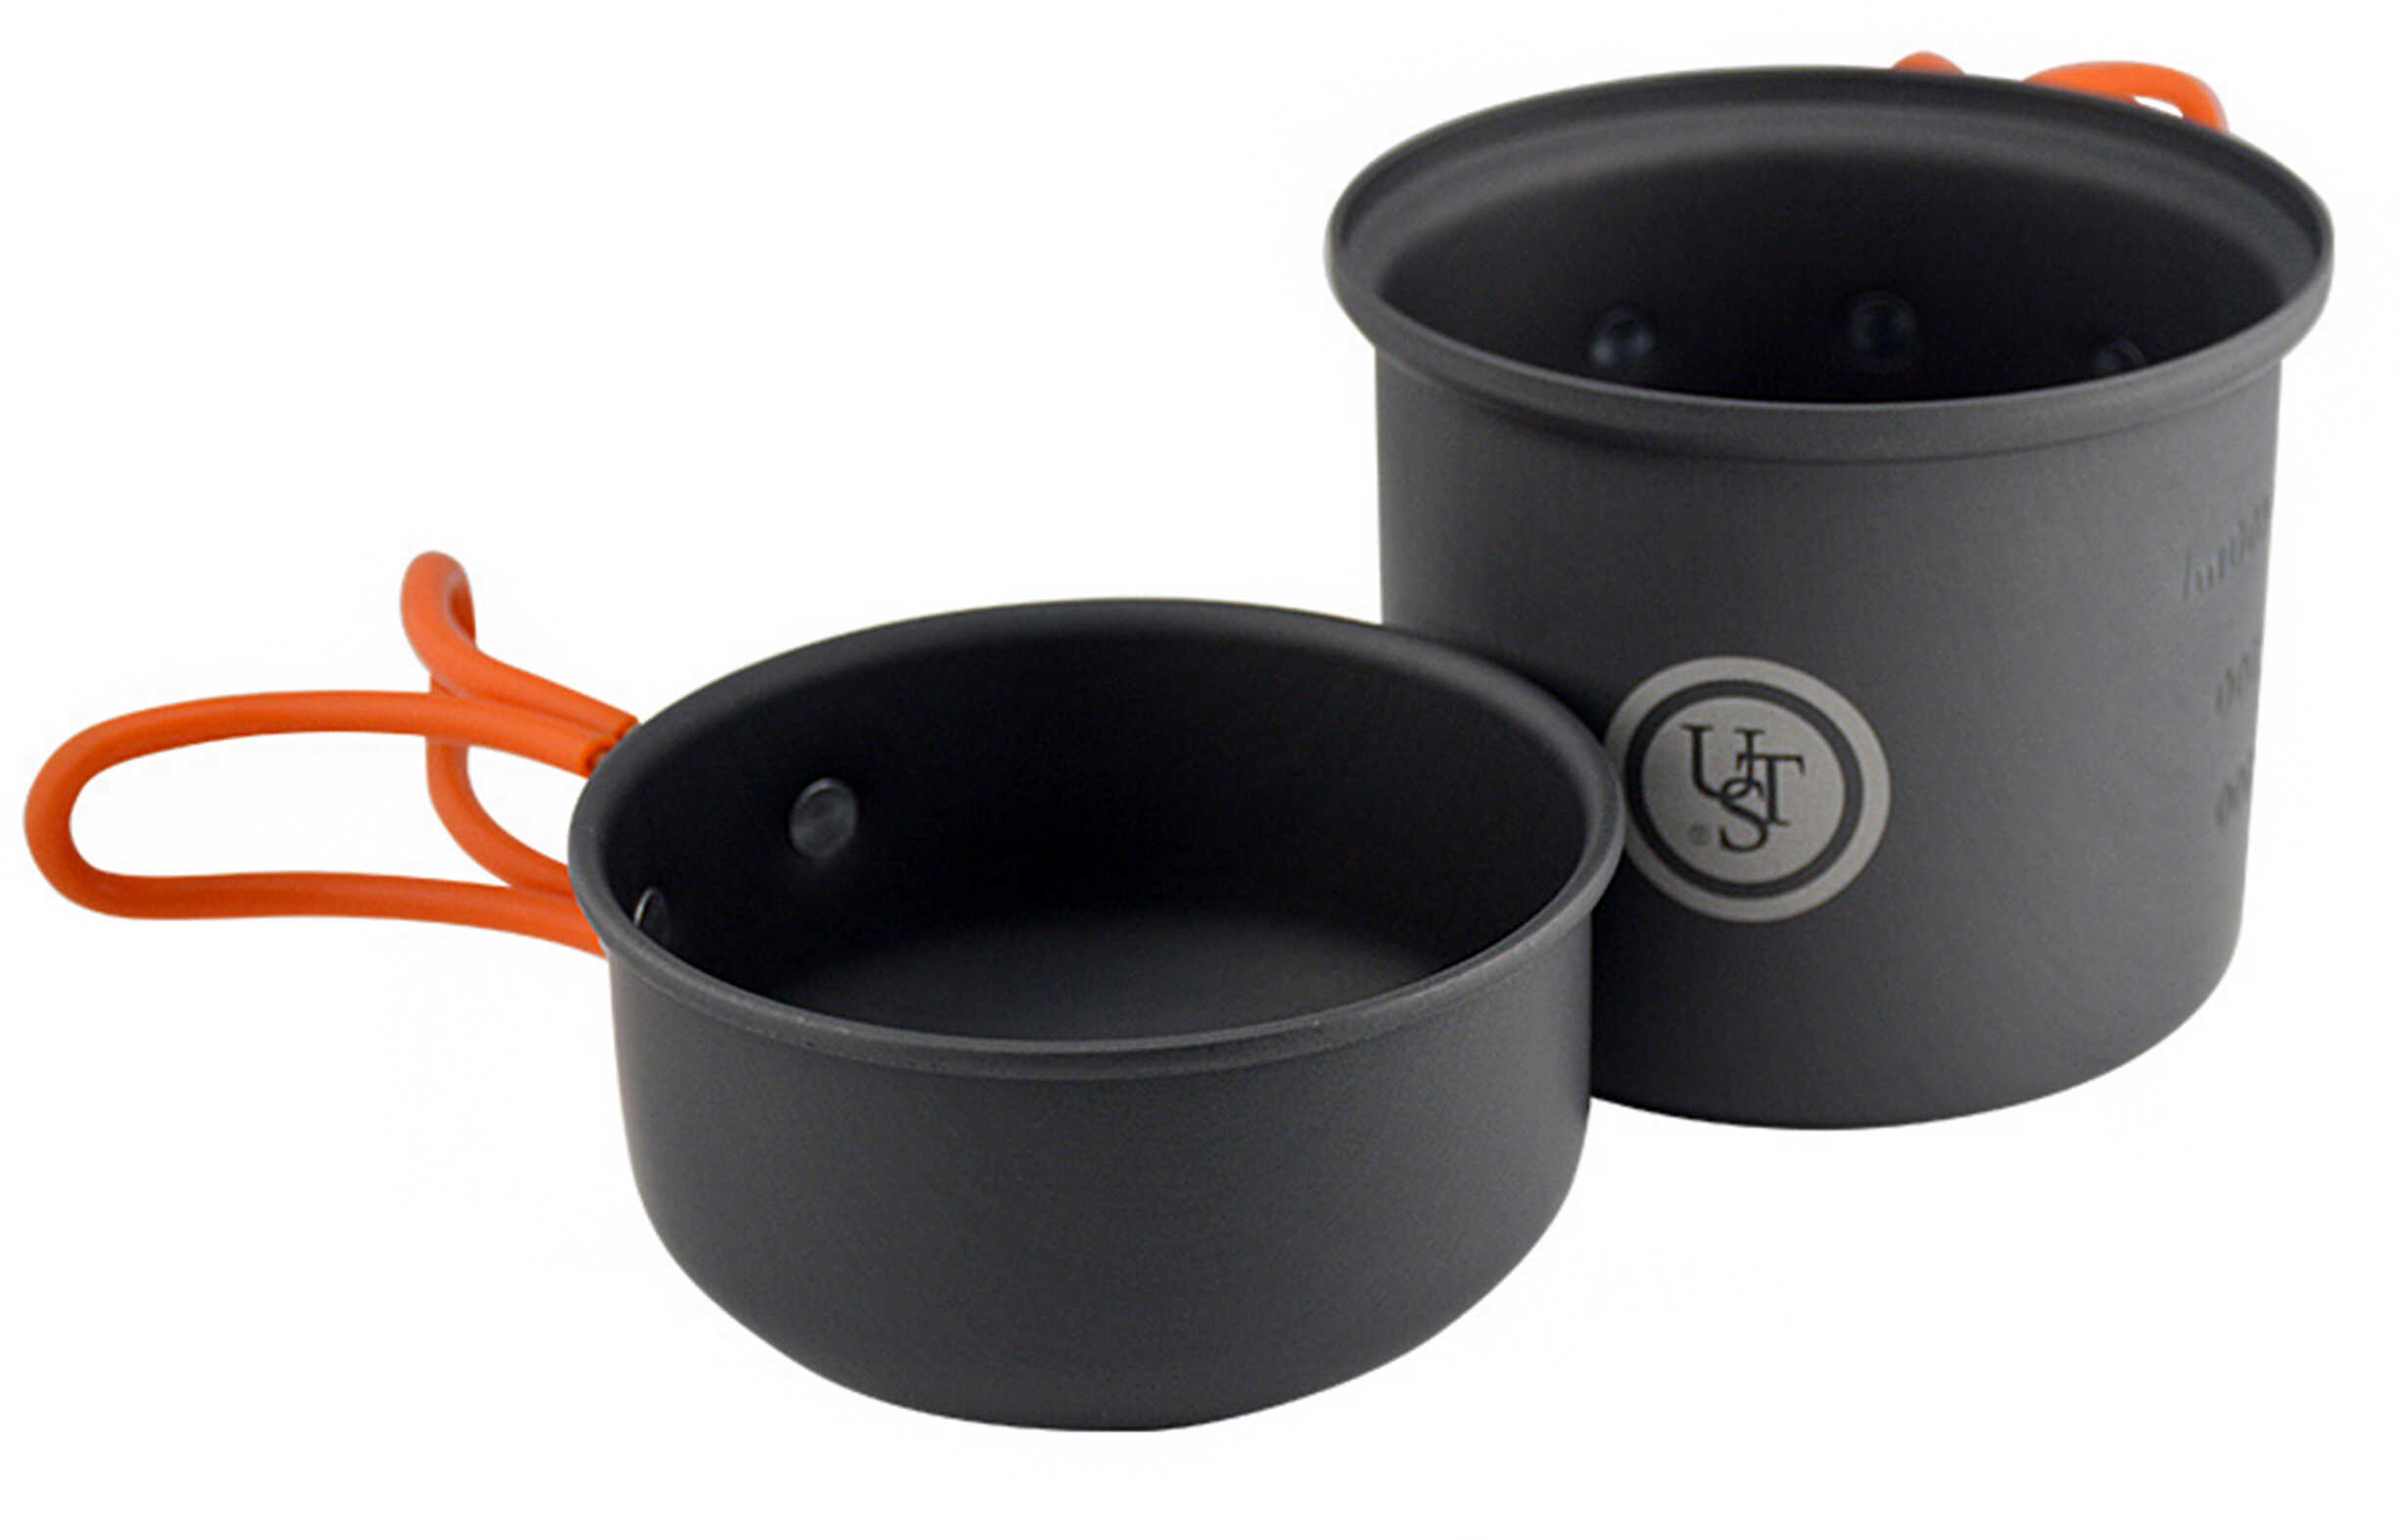 UST - Ultimate Survival Technologies Solo Cook Kit Orange Handles Hard Anodized Aluminum Construction 5.2"x4.2" Peggable